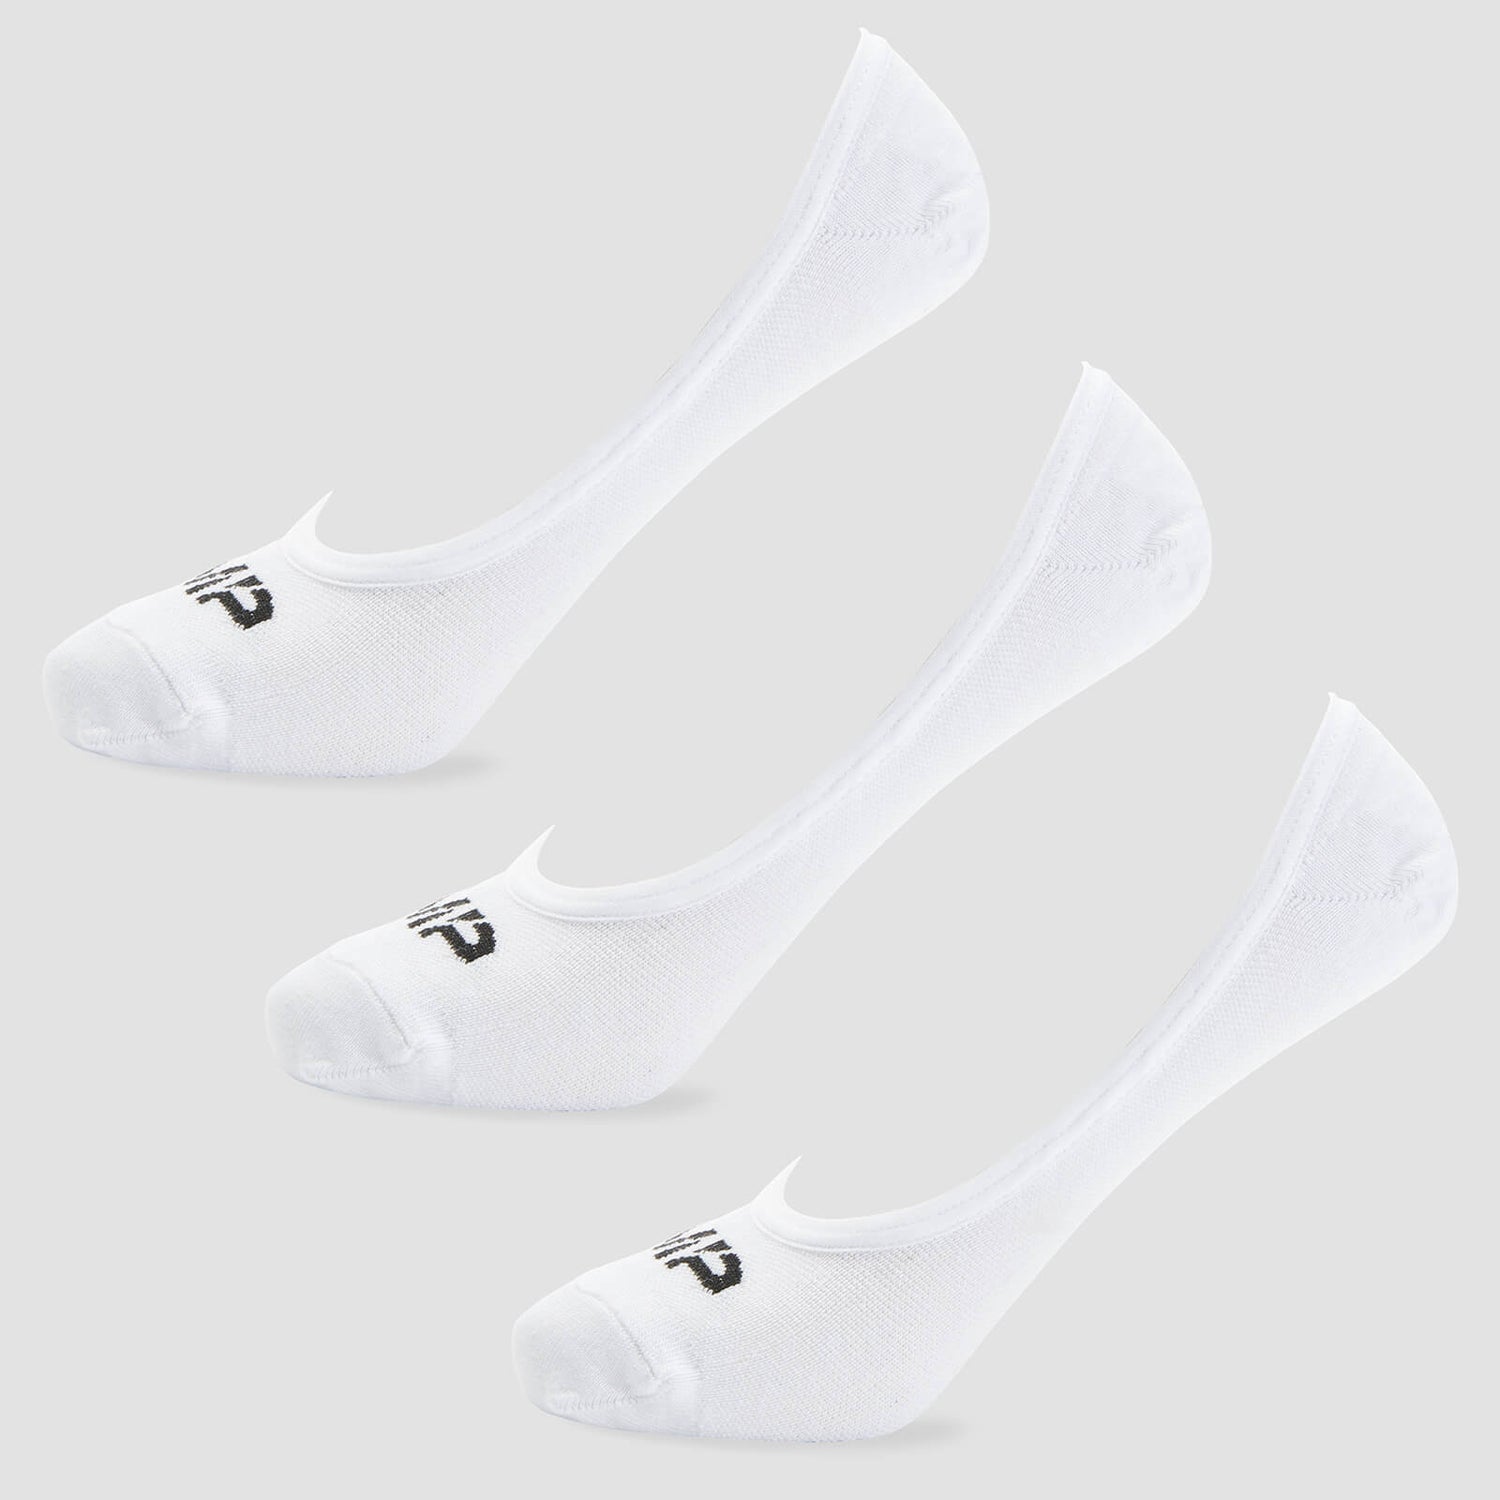 Moške nevidne nogavice - Bele - UK 6-8